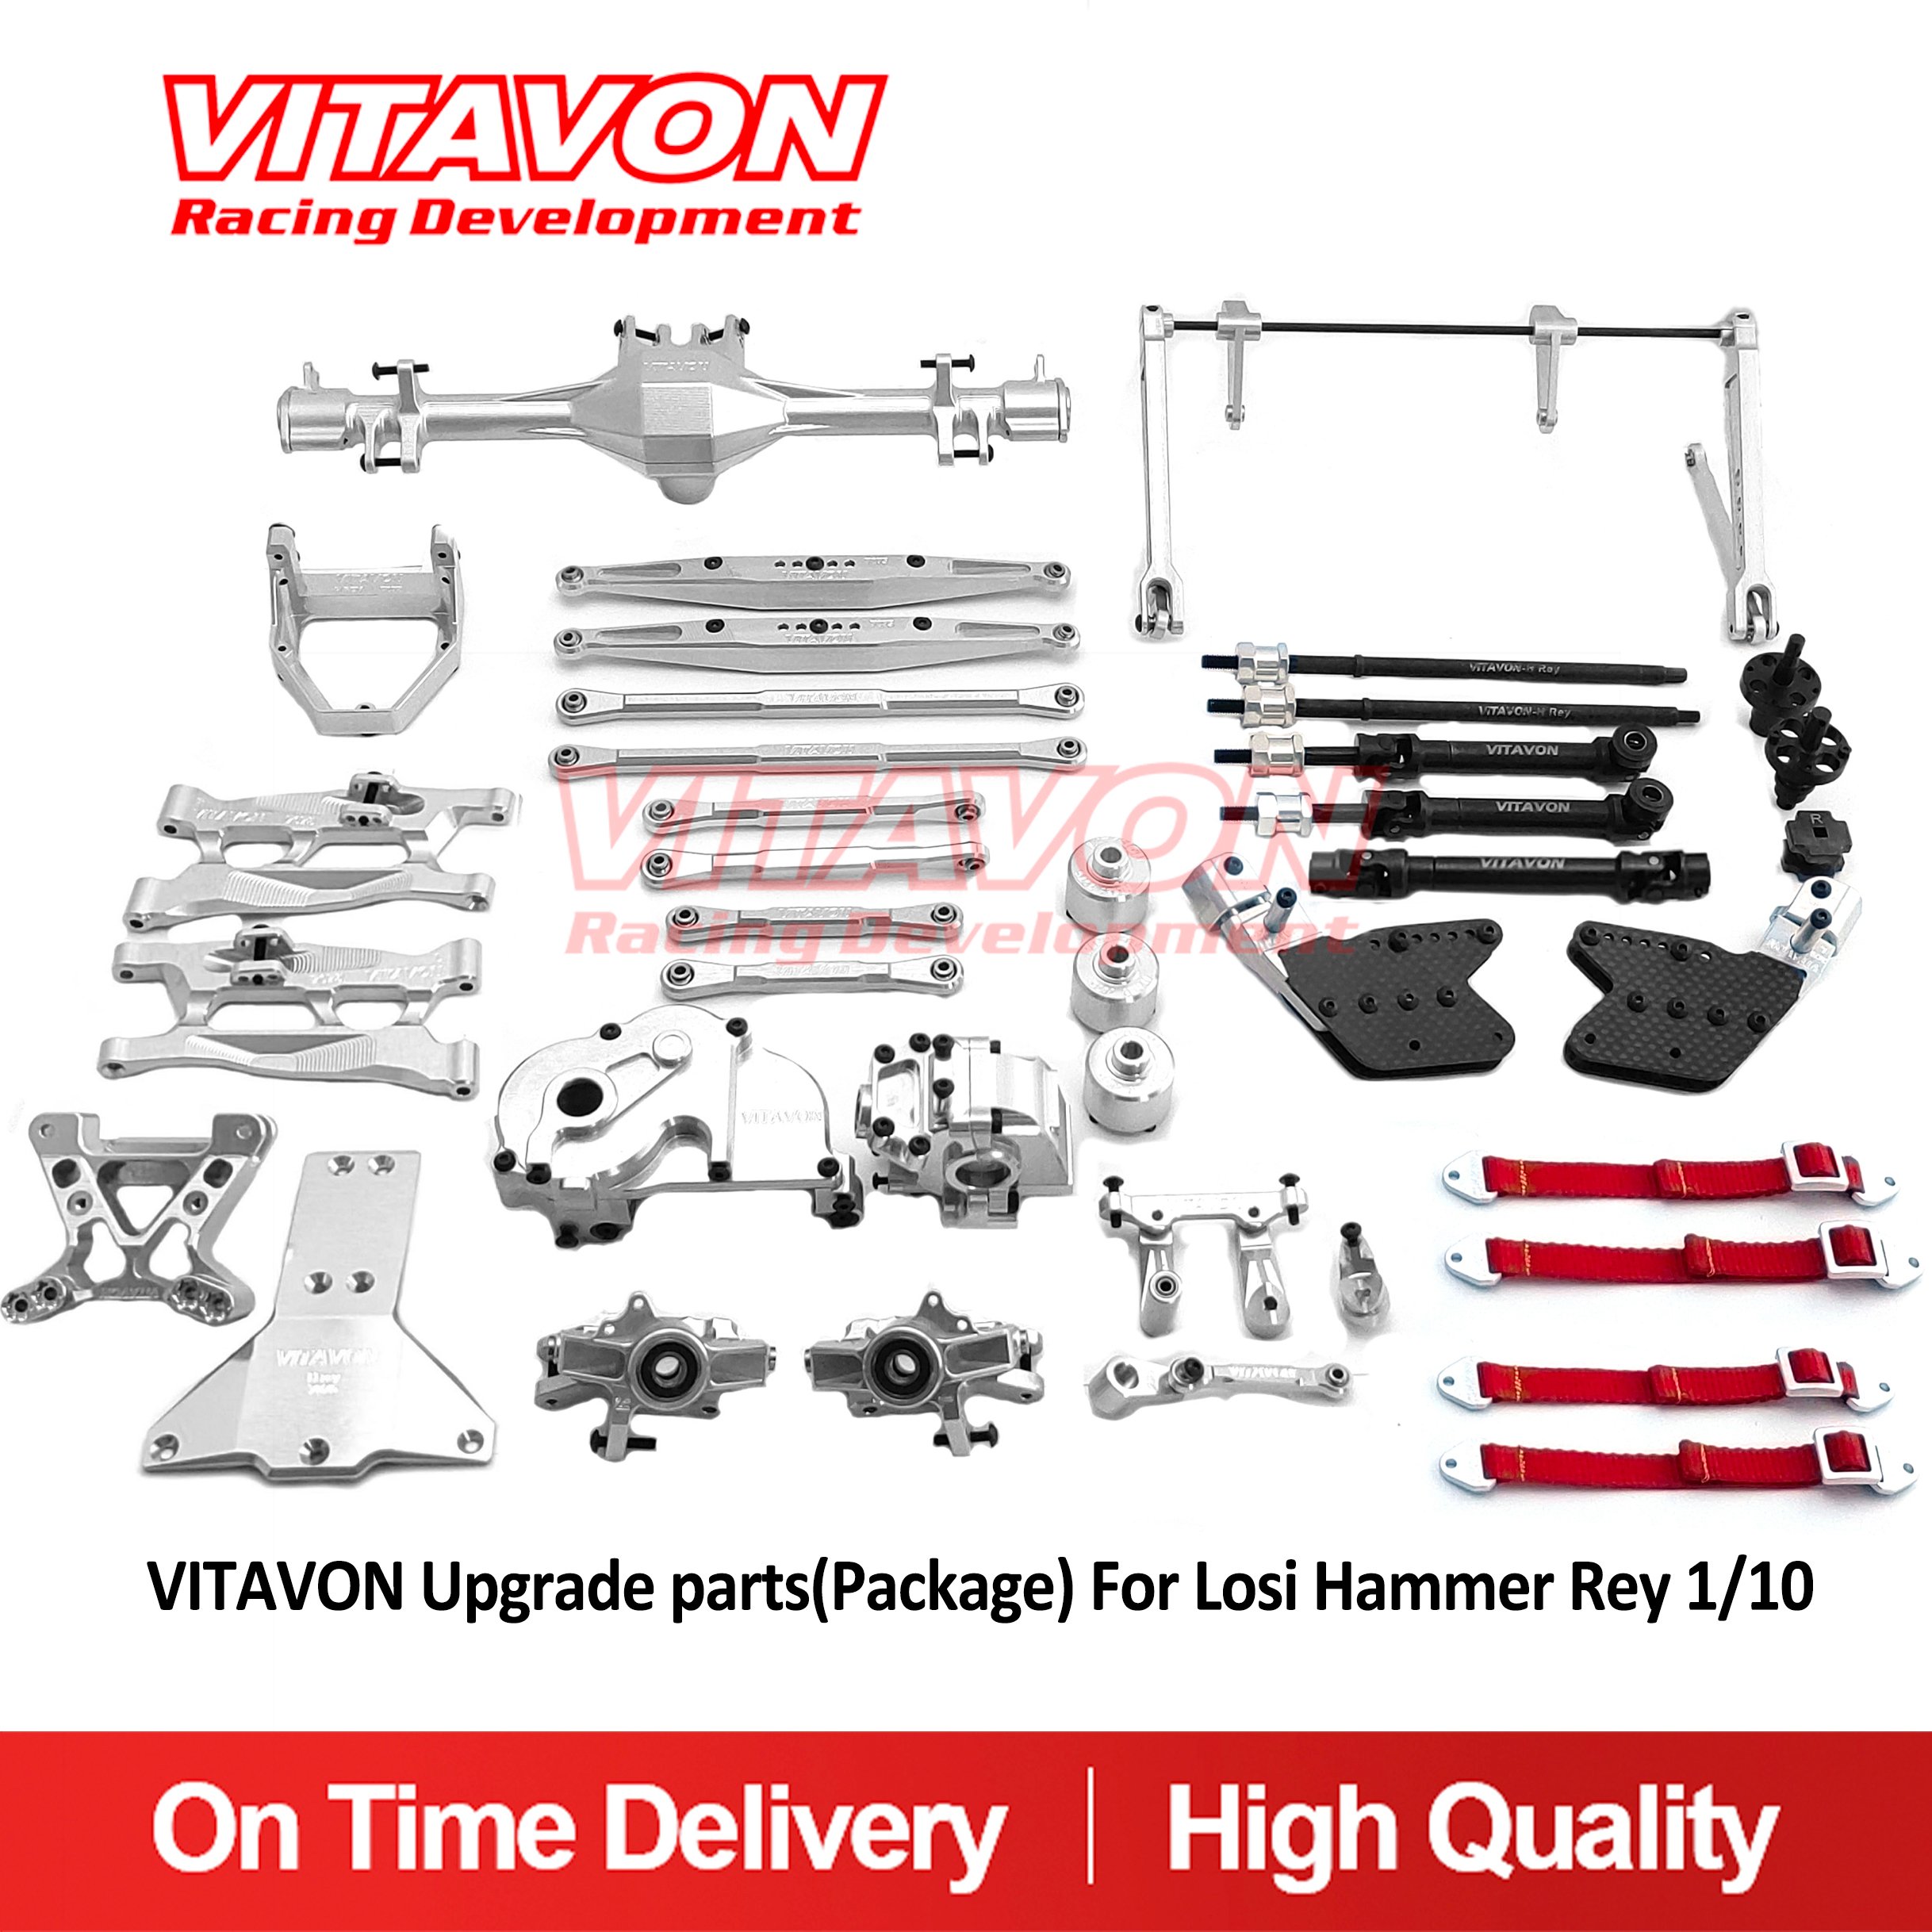 VITAVON Upgrade parts(Package) For Losi Hammer Rey 1/10